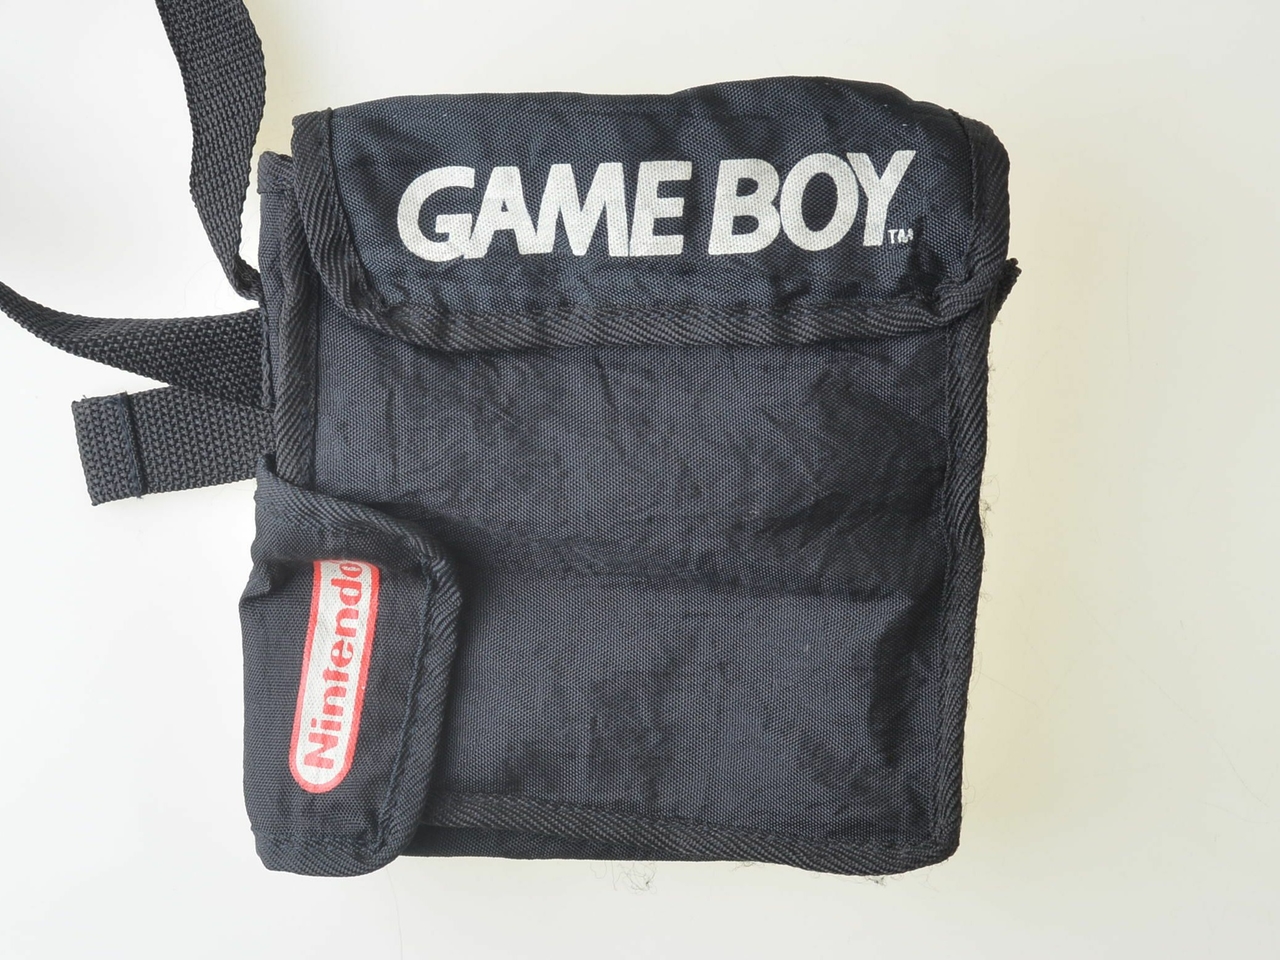 Gameboy Soft Case - Gameboy Classic Hardware